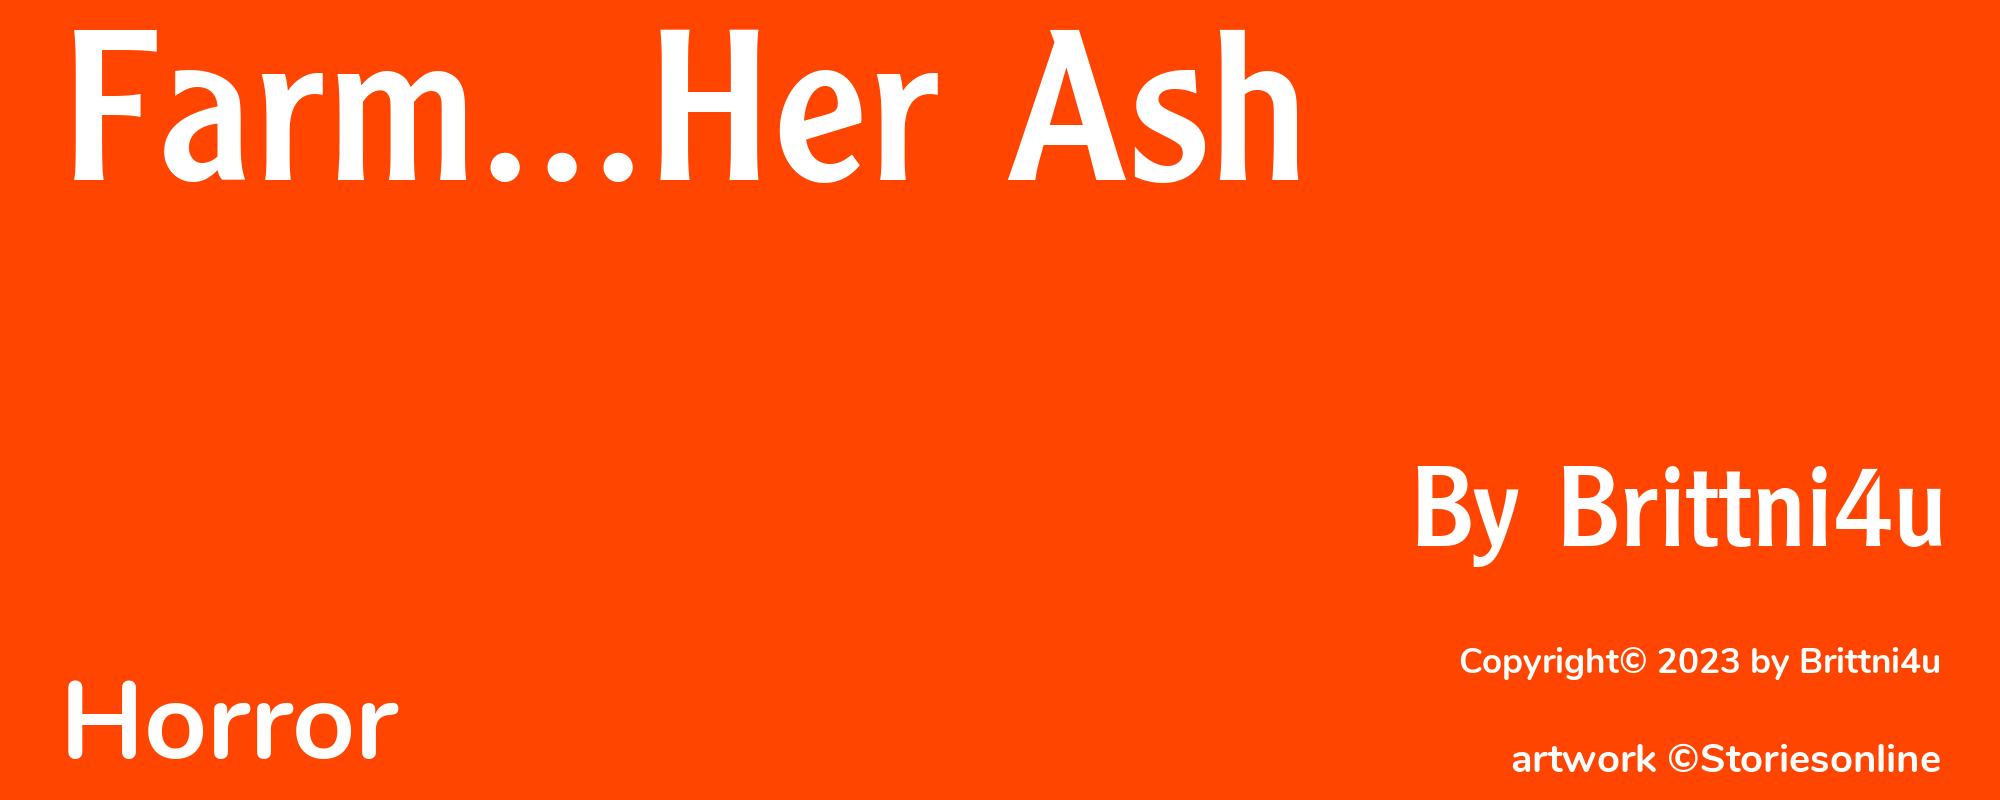 Farm...Her Ash - Cover